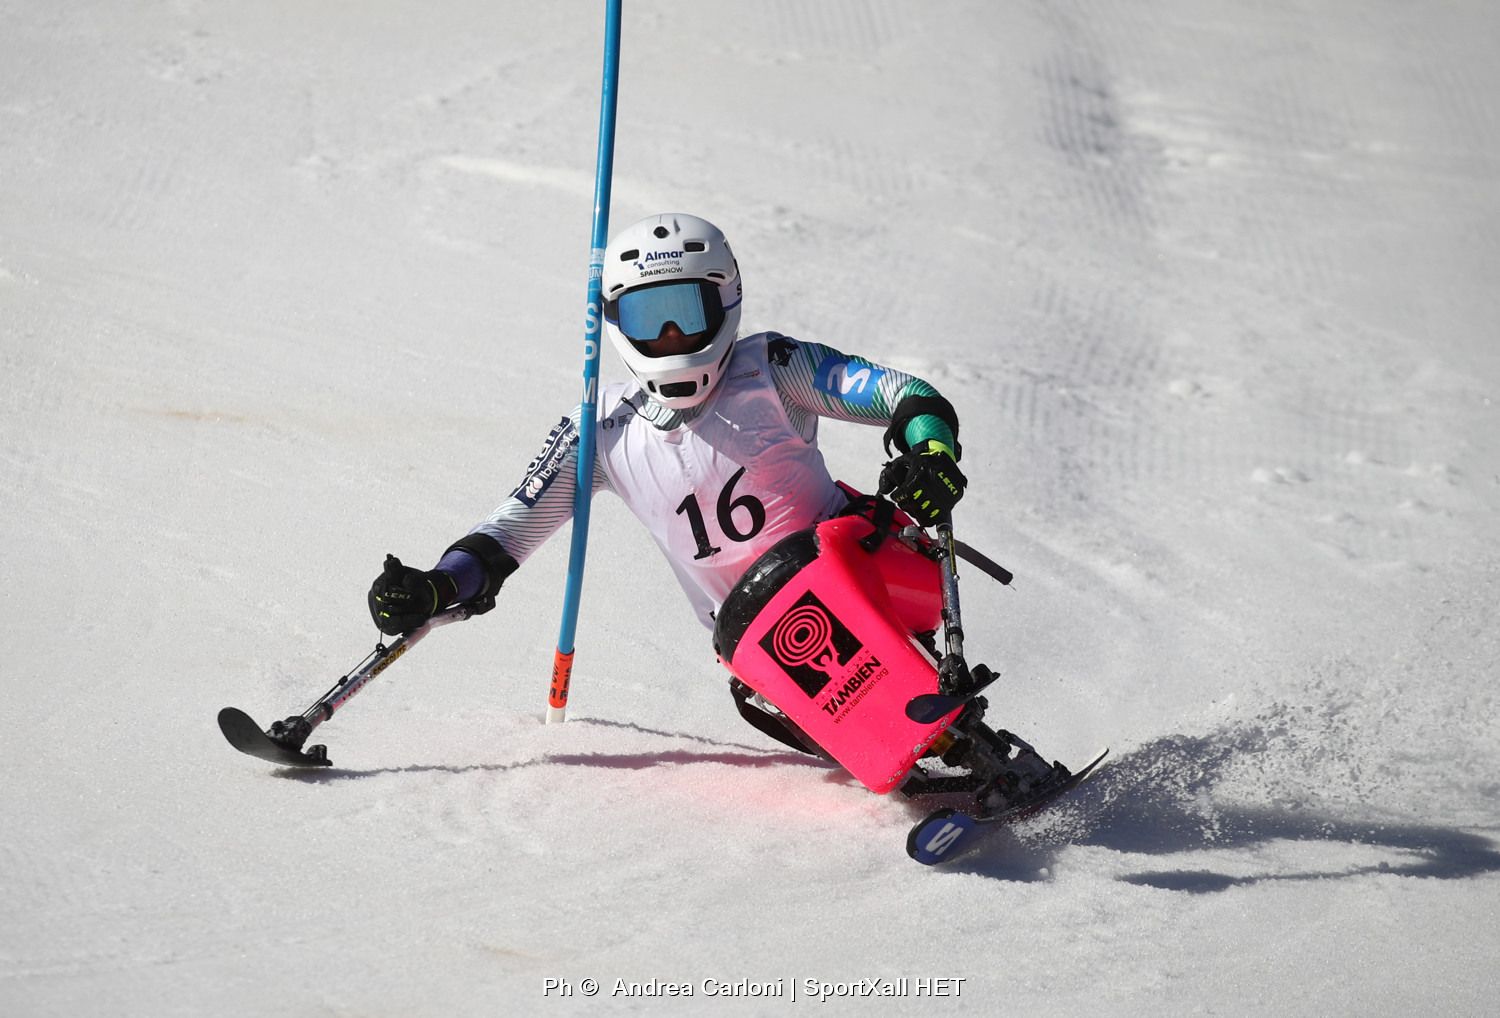 La esquiadora Audrey Pascual en Sella Nevea